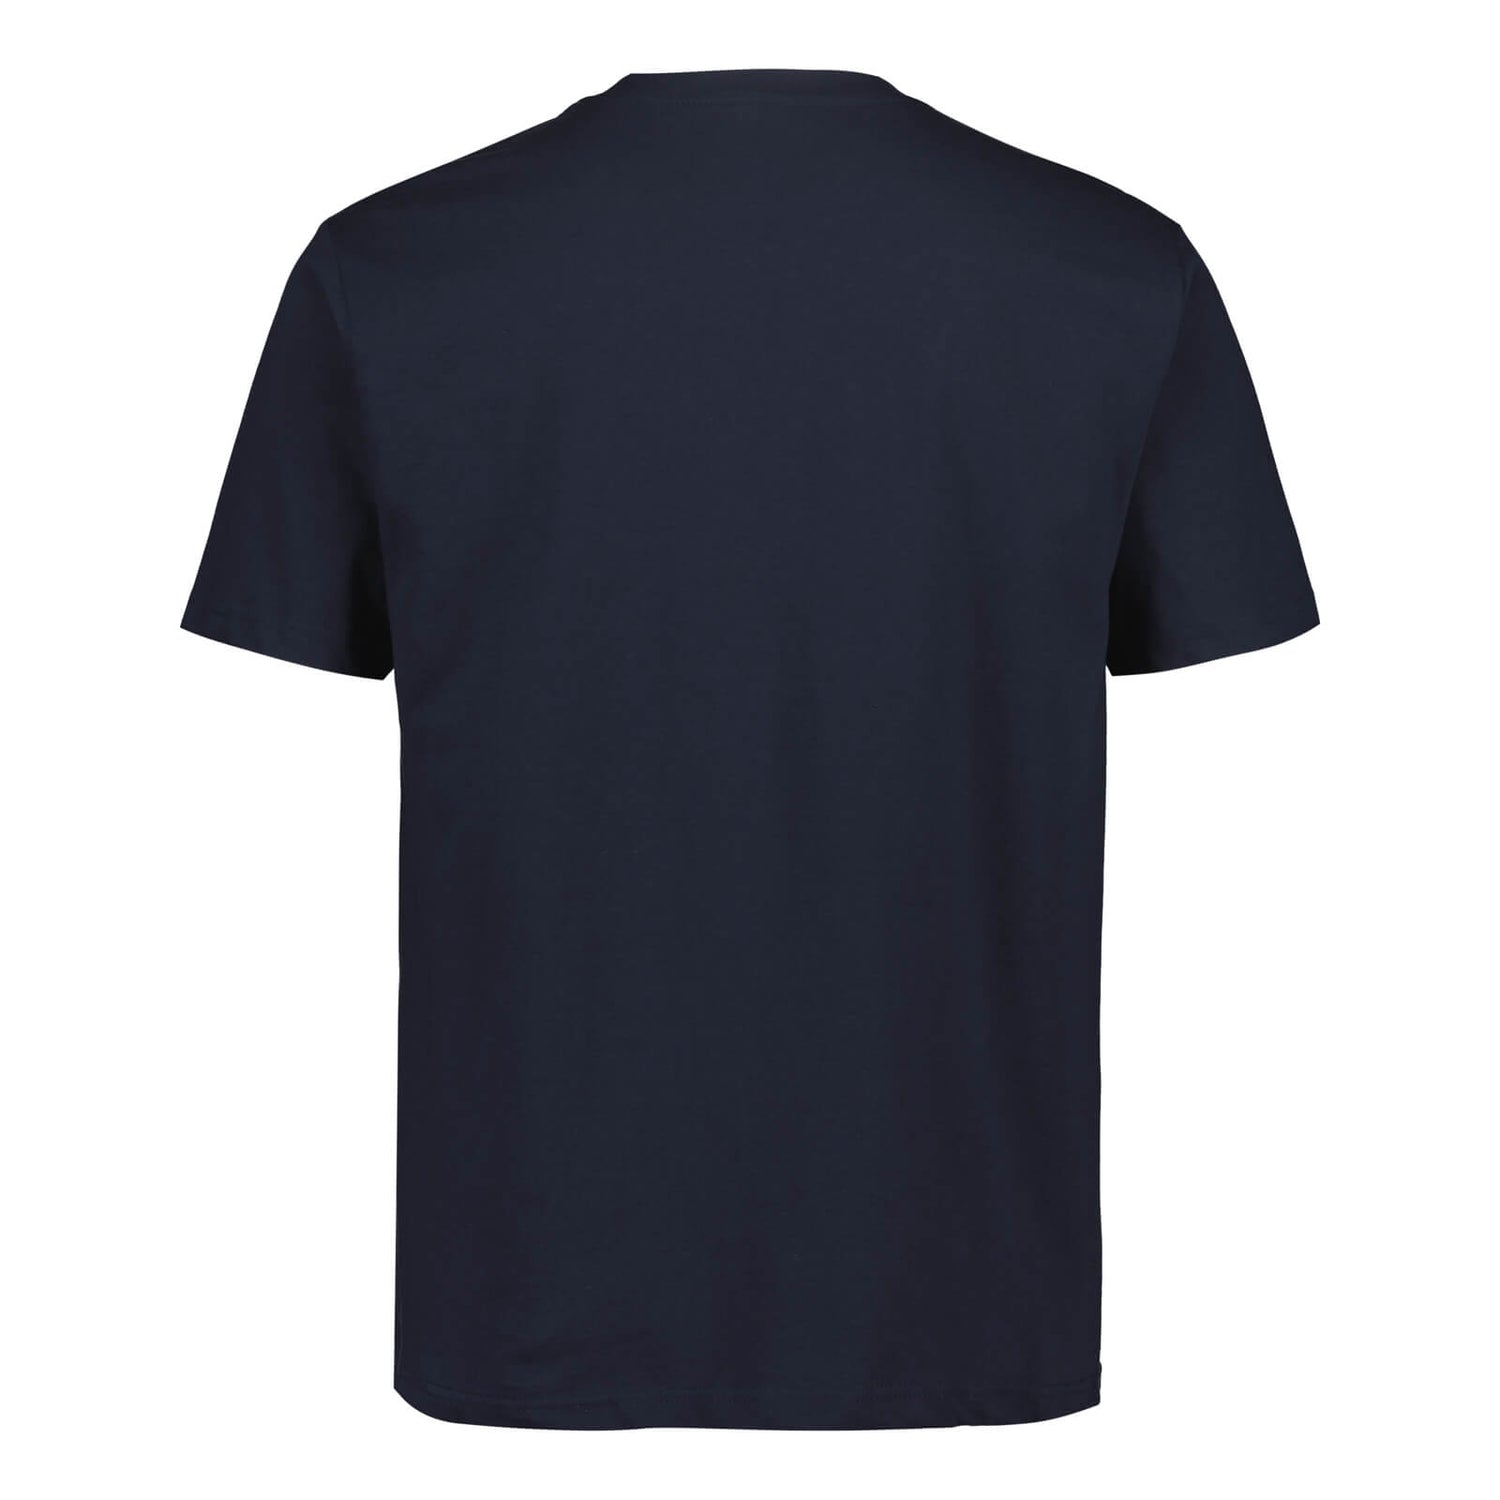 Helmarit 2.0 Classic T-shirt, Dark blue, Children